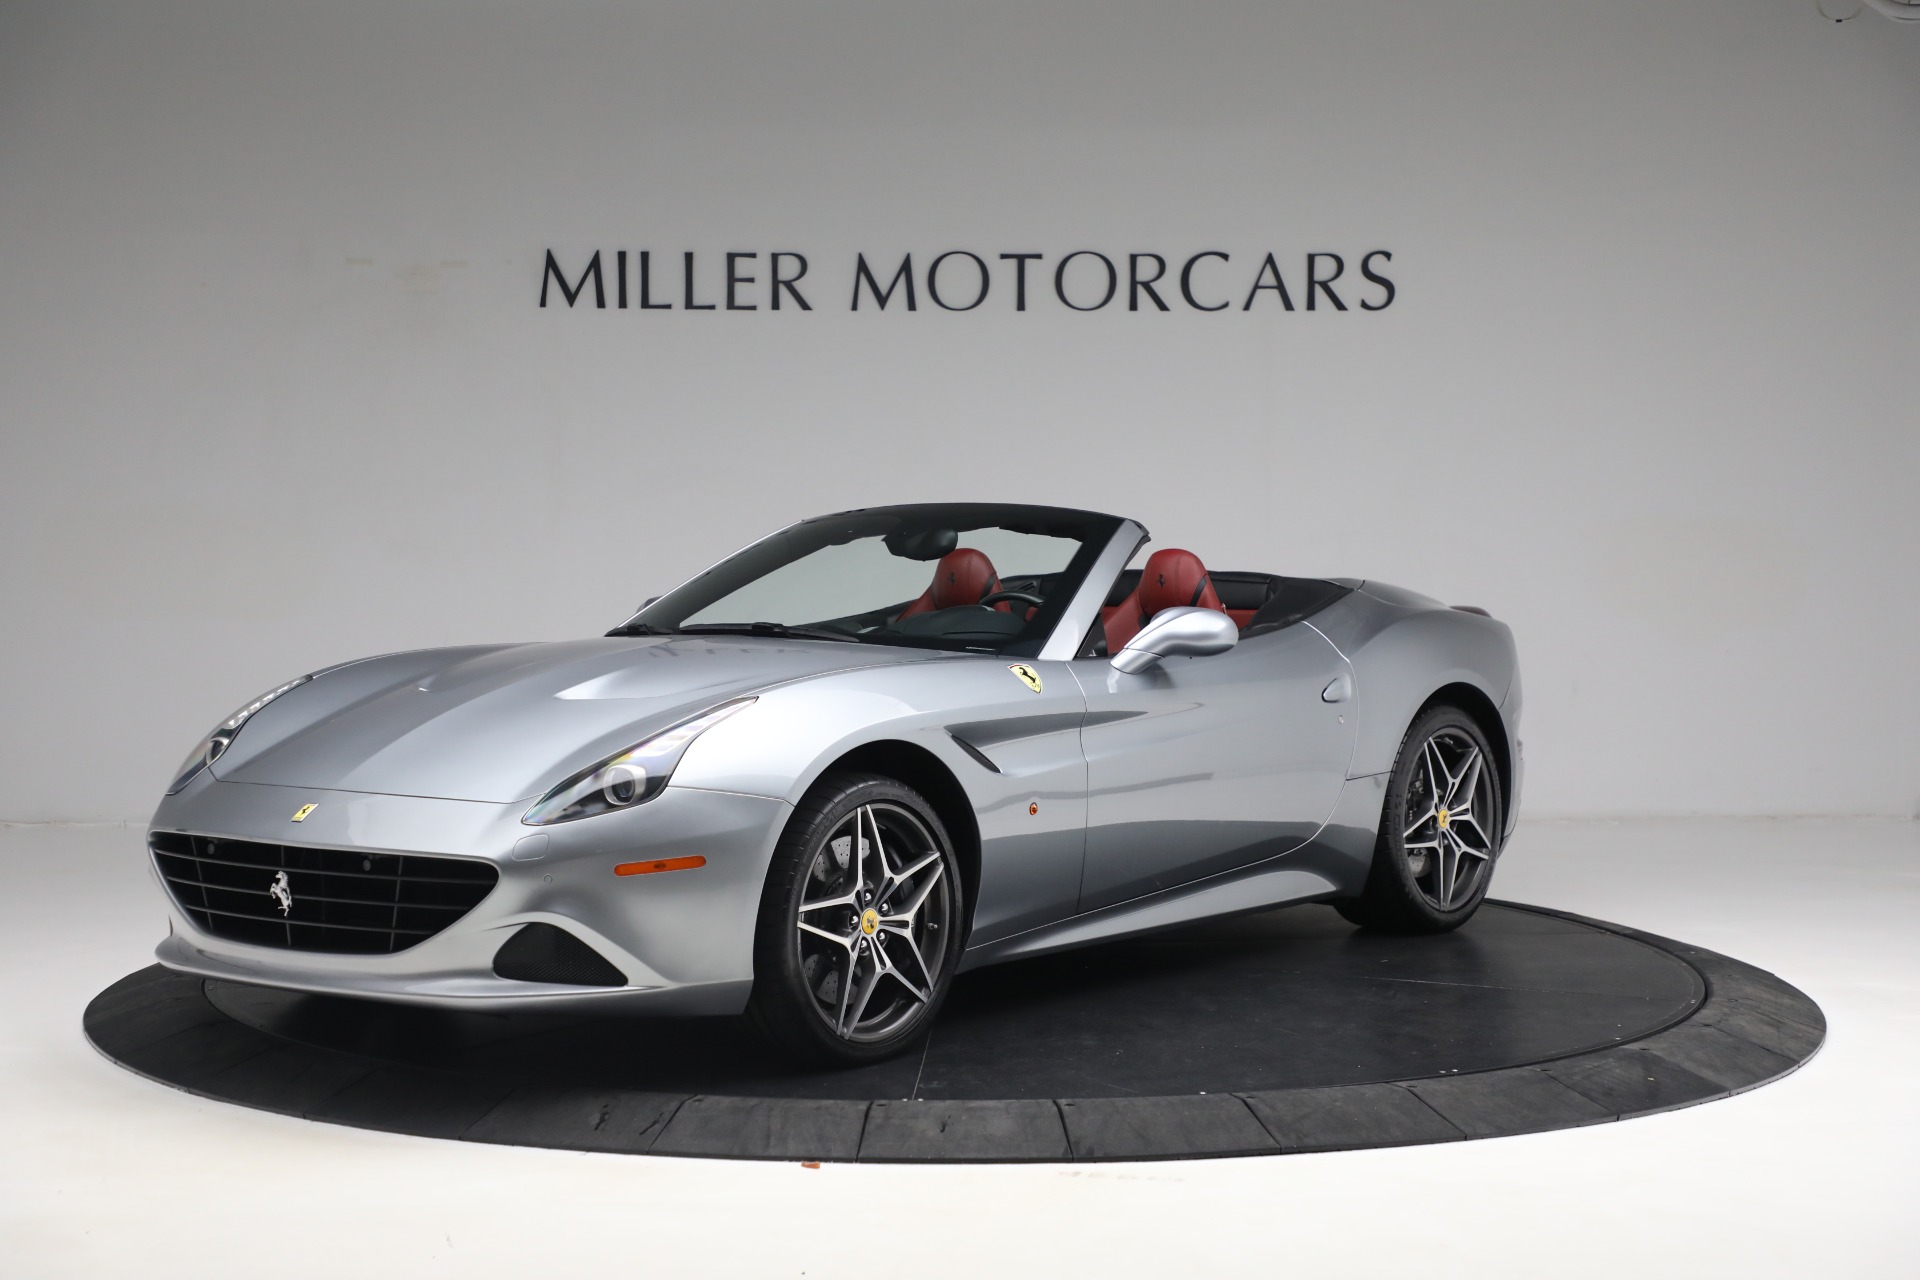 Used 2017 Ferrari California T for sale Sold at Maserati of Greenwich in Greenwich CT 06830 1